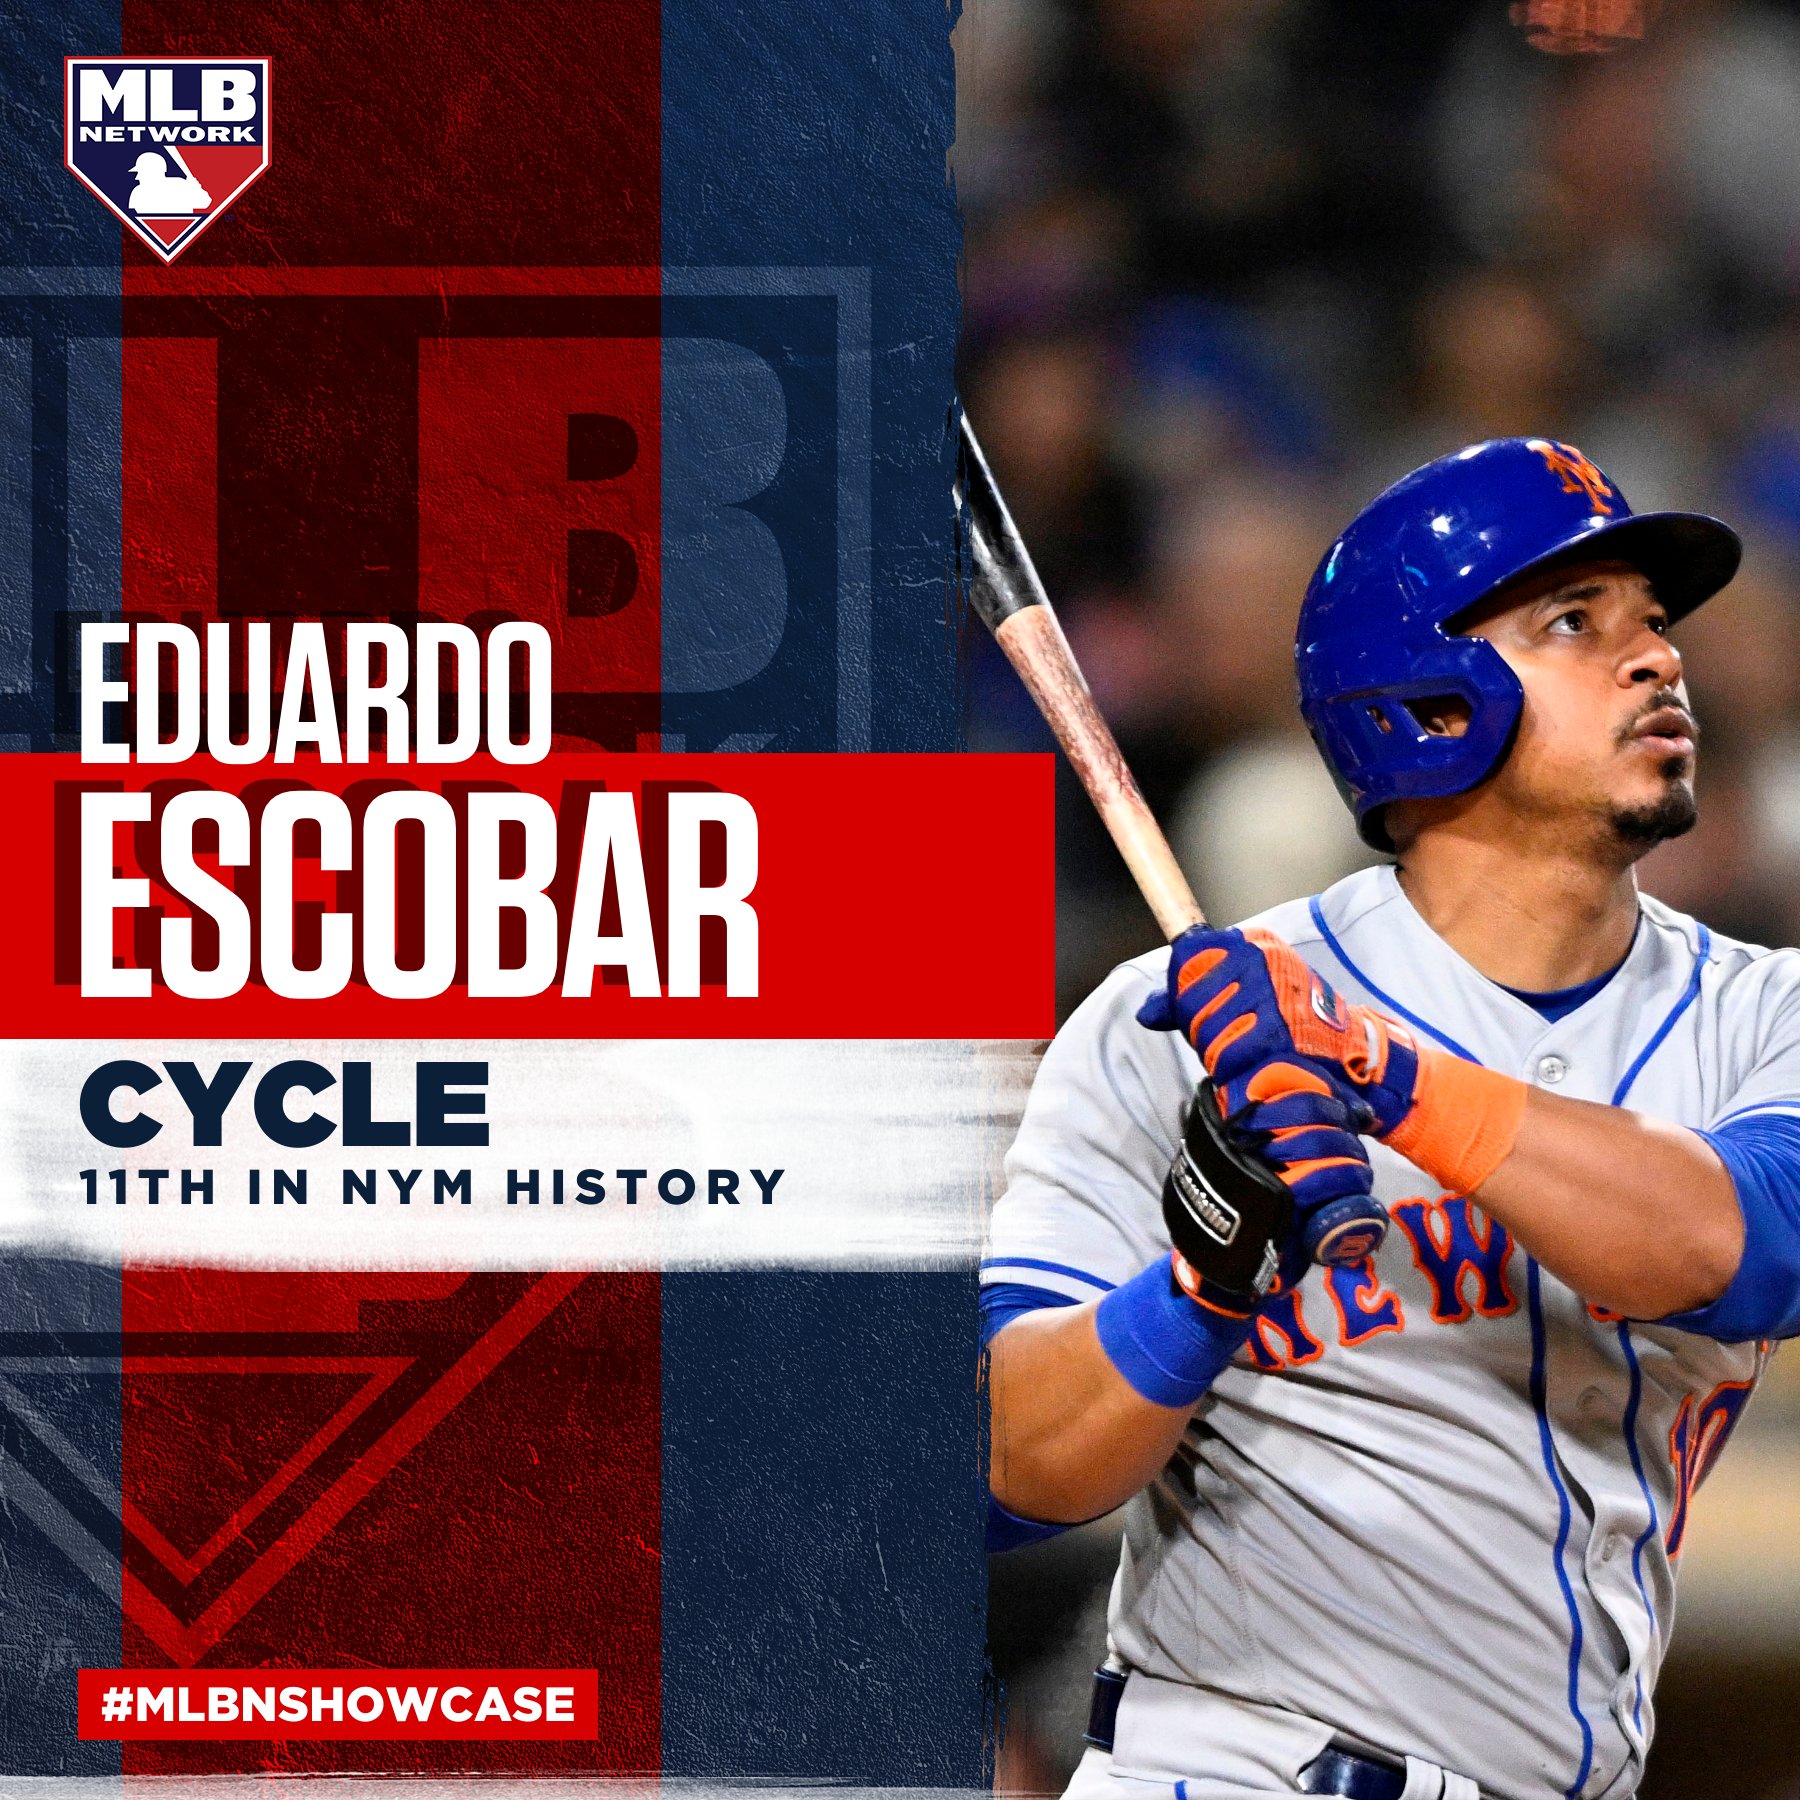 MLB Network on X: 🚨CYCLE🚨 Eduardo Escobar becomes the 11th